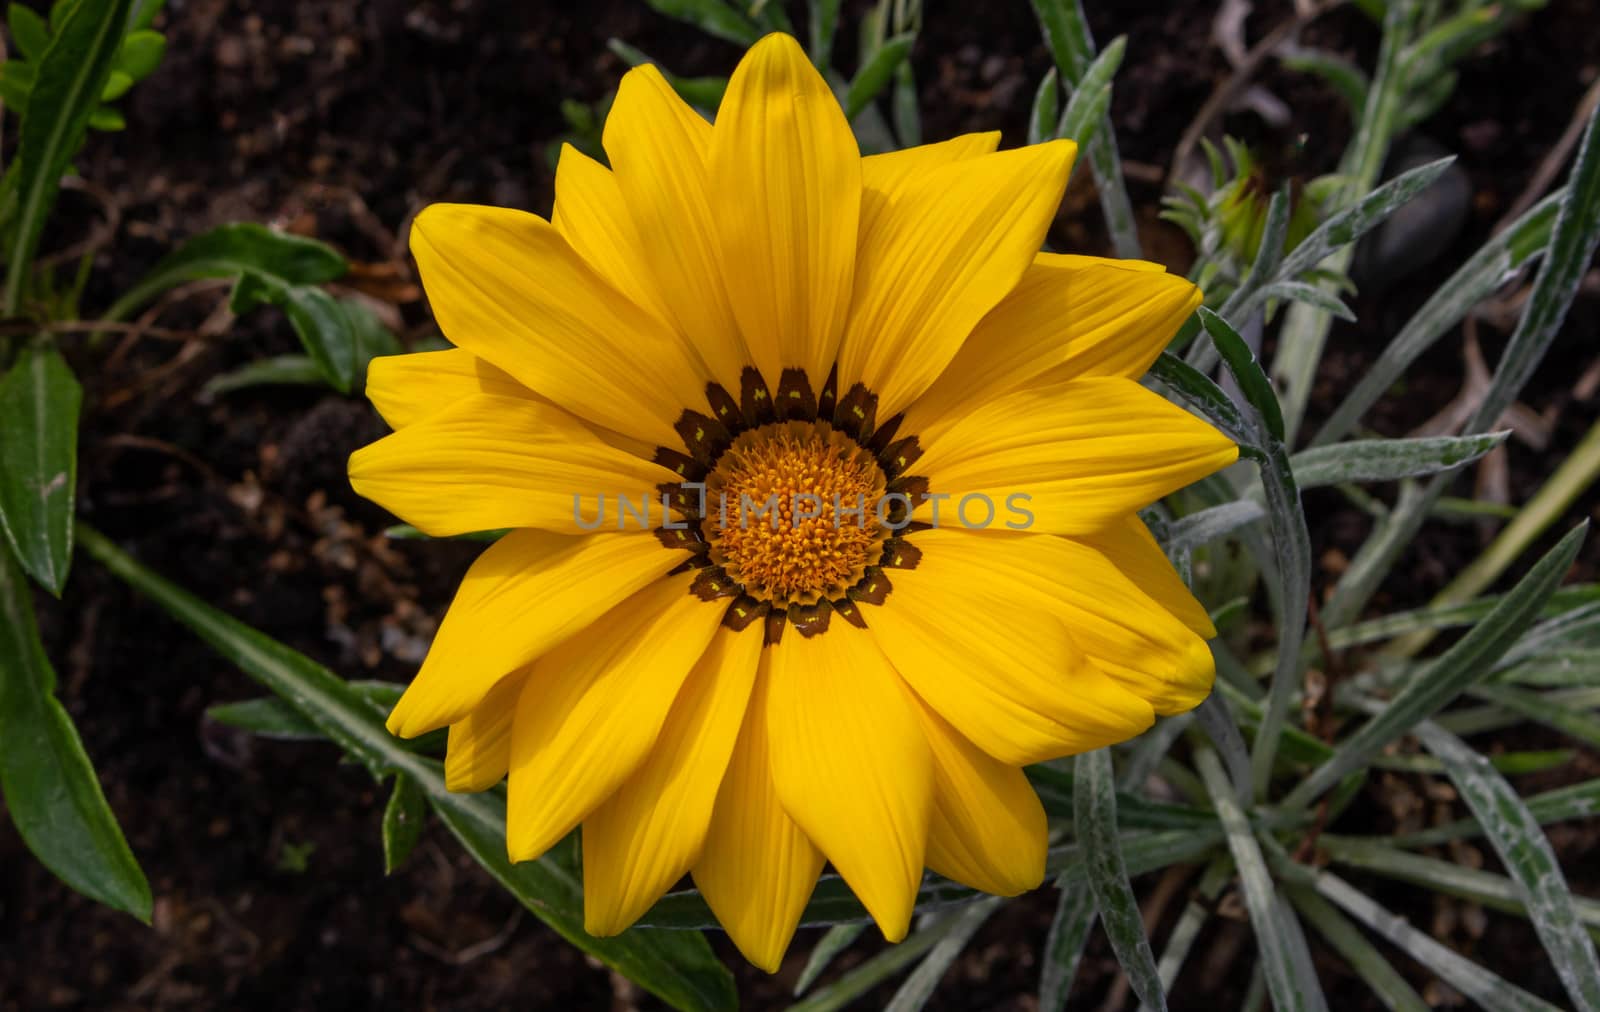 Close-up photo of a beautiful yellow garden flower Gazania Gazania linearis in a flower bed in the Park.